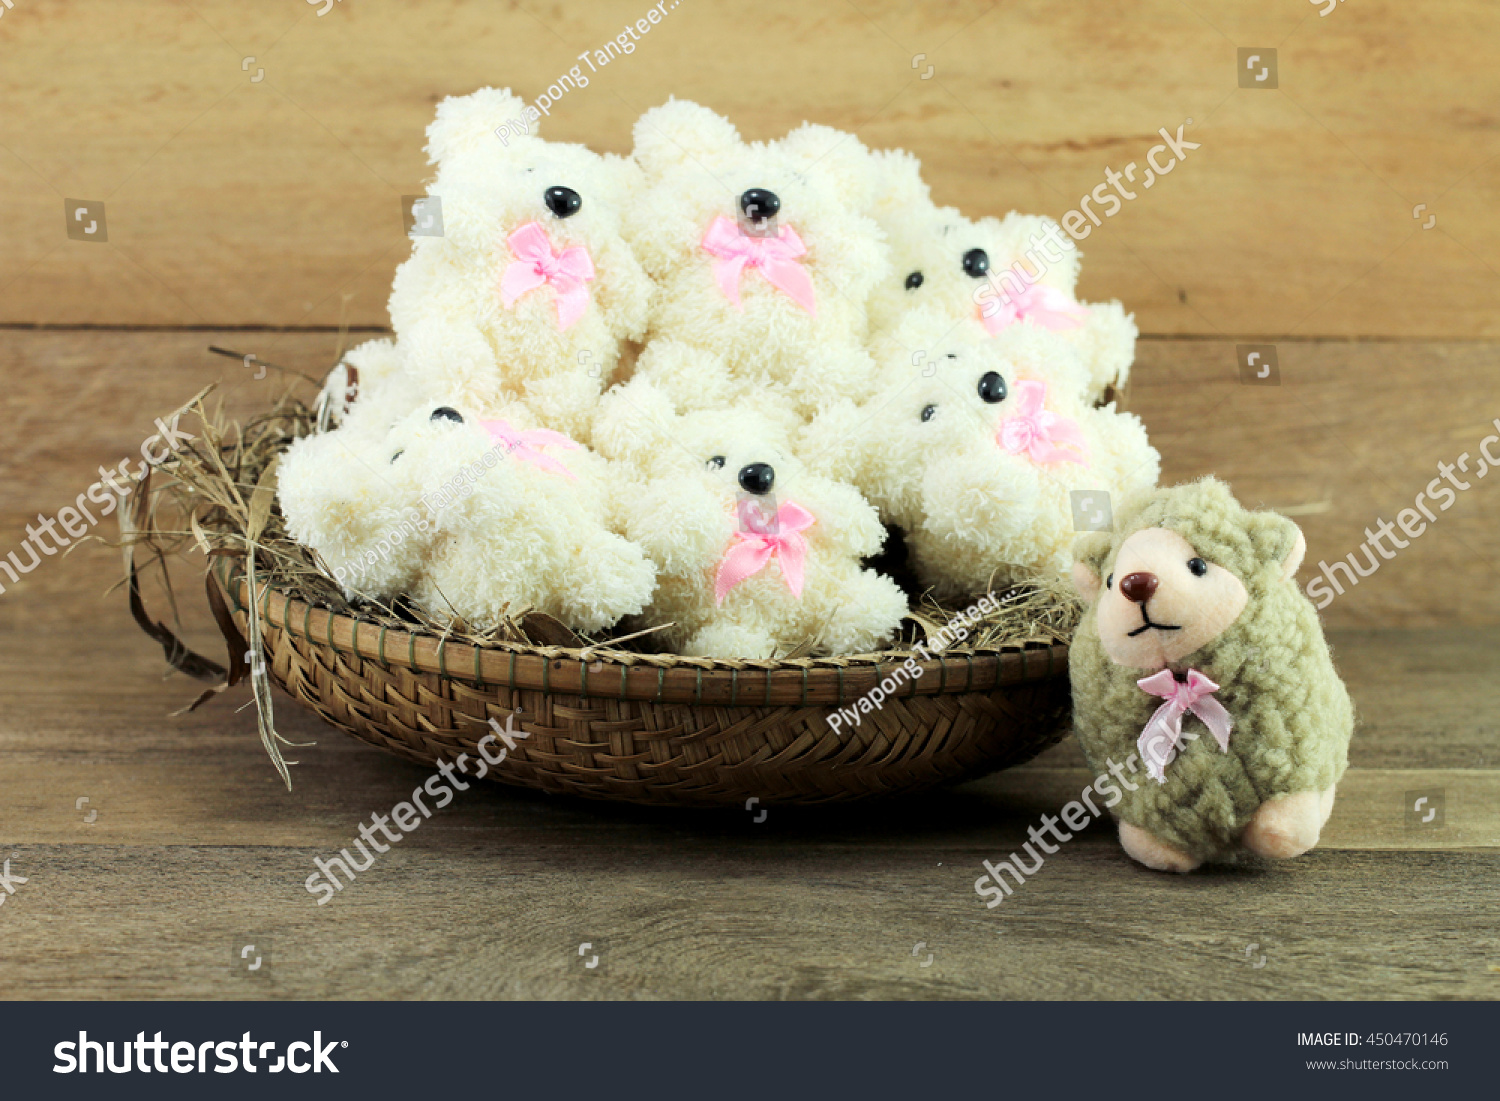 sheep that look like teddy bears